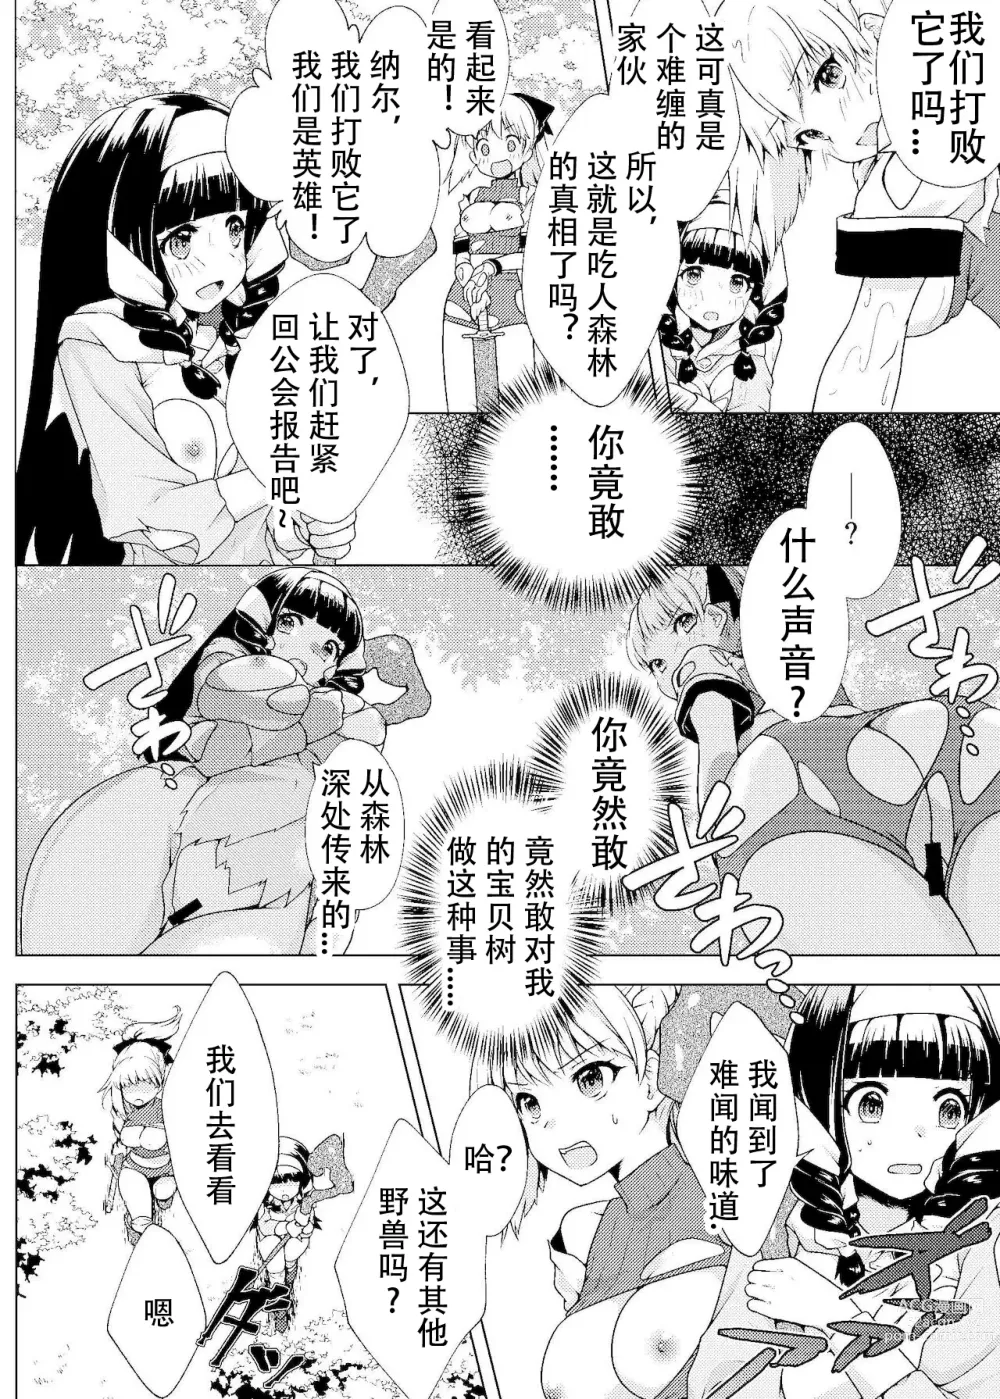 Page 13 of manga Nakayoshi Boukensha no Marunomi Haiboku End